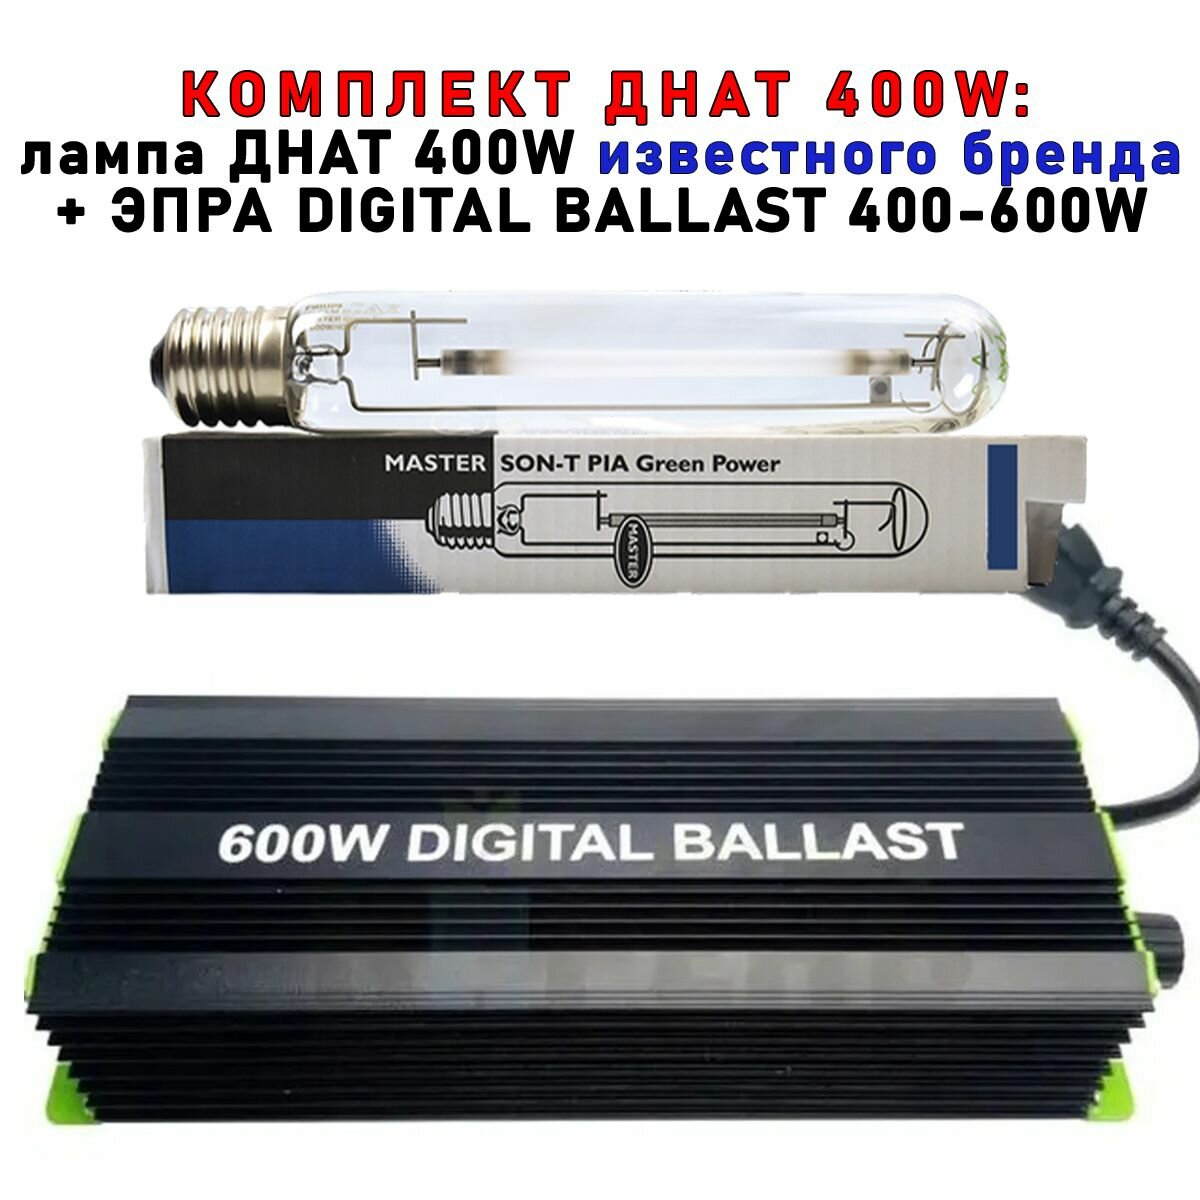 Комплект днат 400 Вт (фитосветильник): ЭПРА DIGITAL BALLAST 250-400-600W + лампа Phillip GREEN POWER 400W